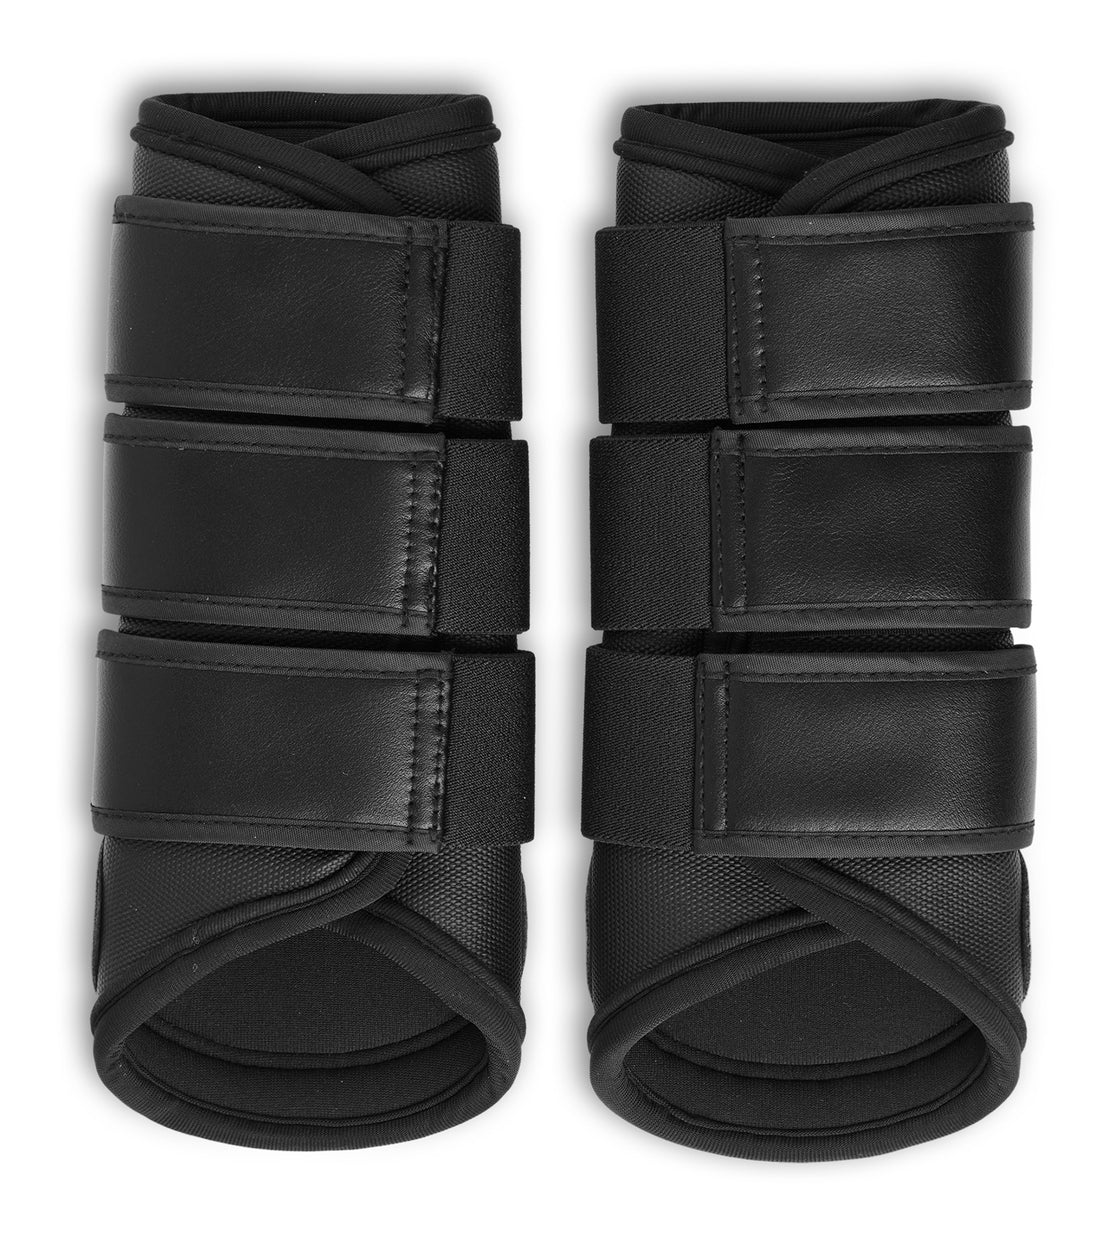 Kingsland - Gamasher Harley Protection Boots - Black